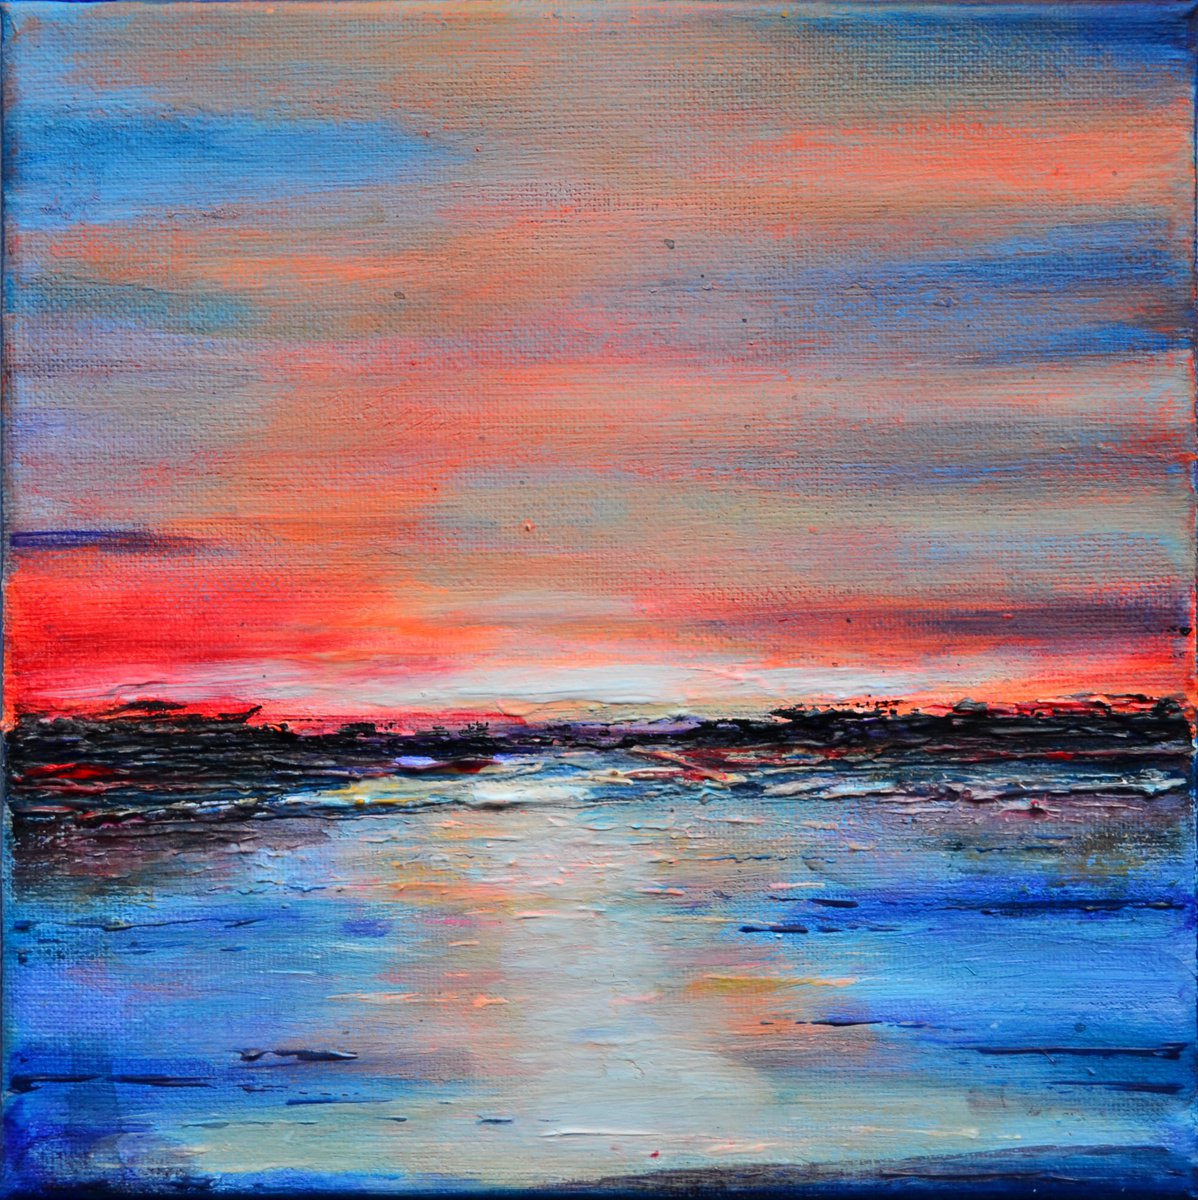 The Orange Sunset - Modern abstract landscape Gift Idea by Misty Lady - M. Nierobisz